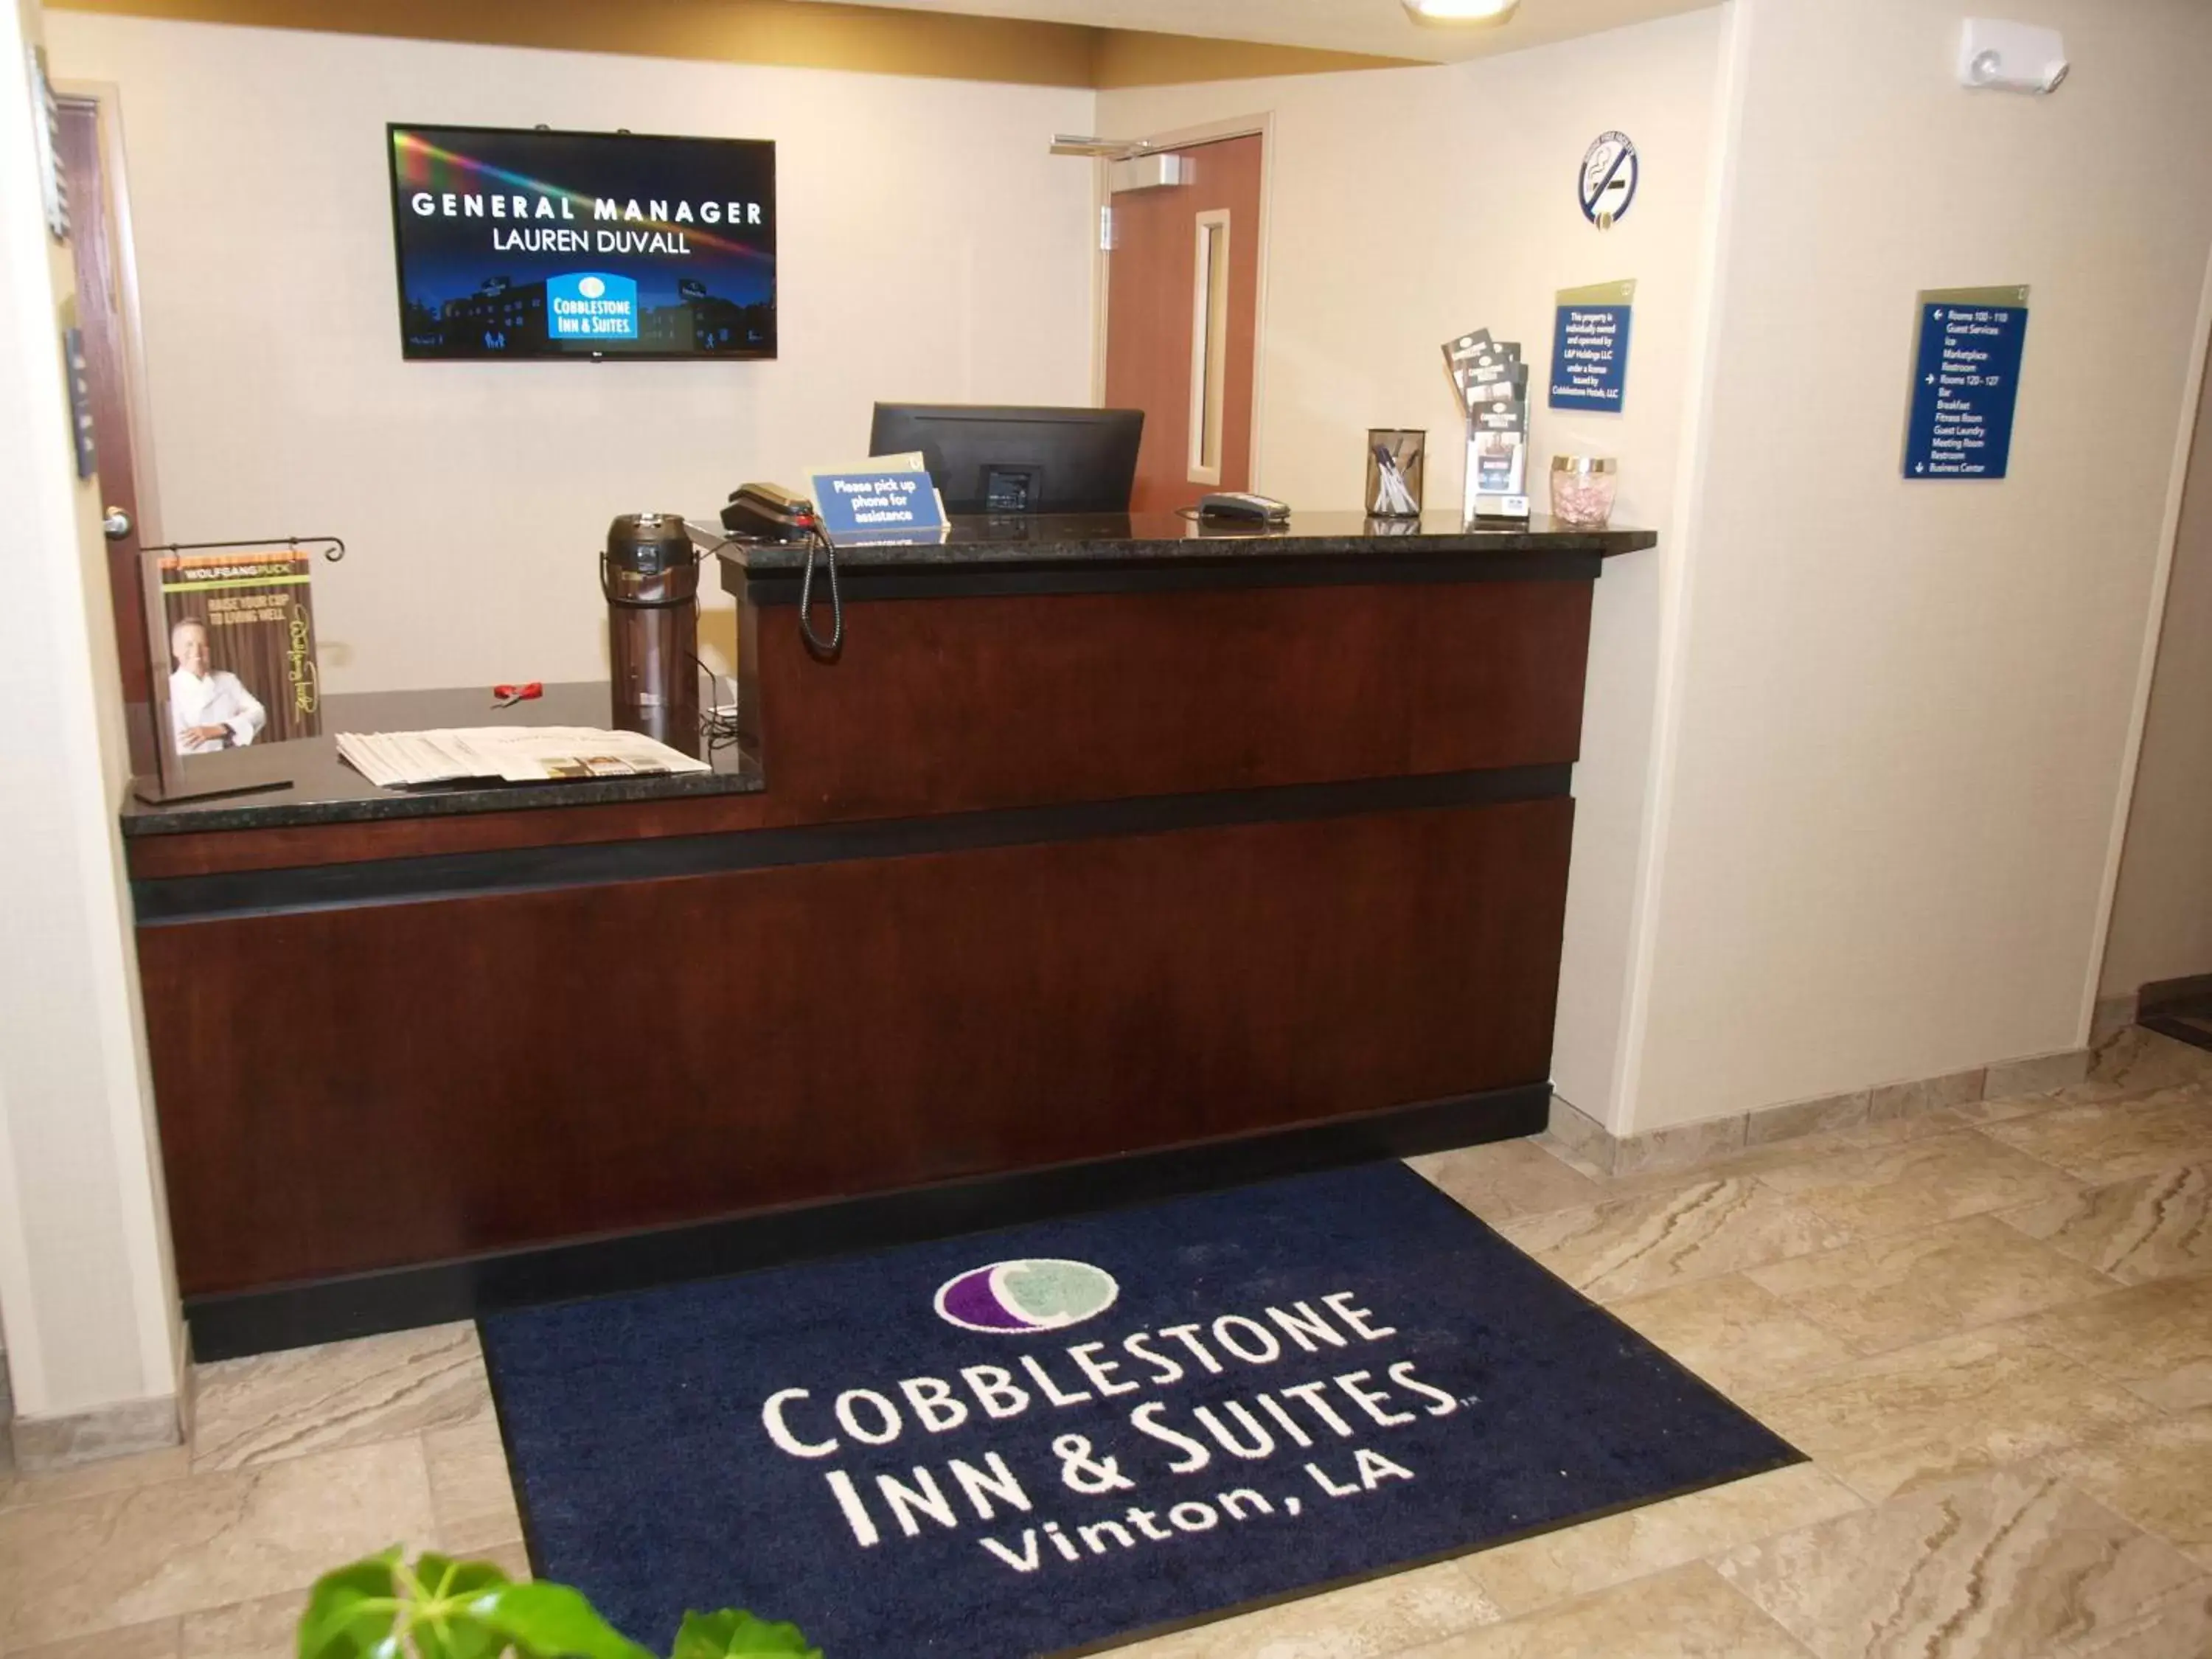 Lobby or reception in Cobblestone Inn & Suites - Vinton, LA